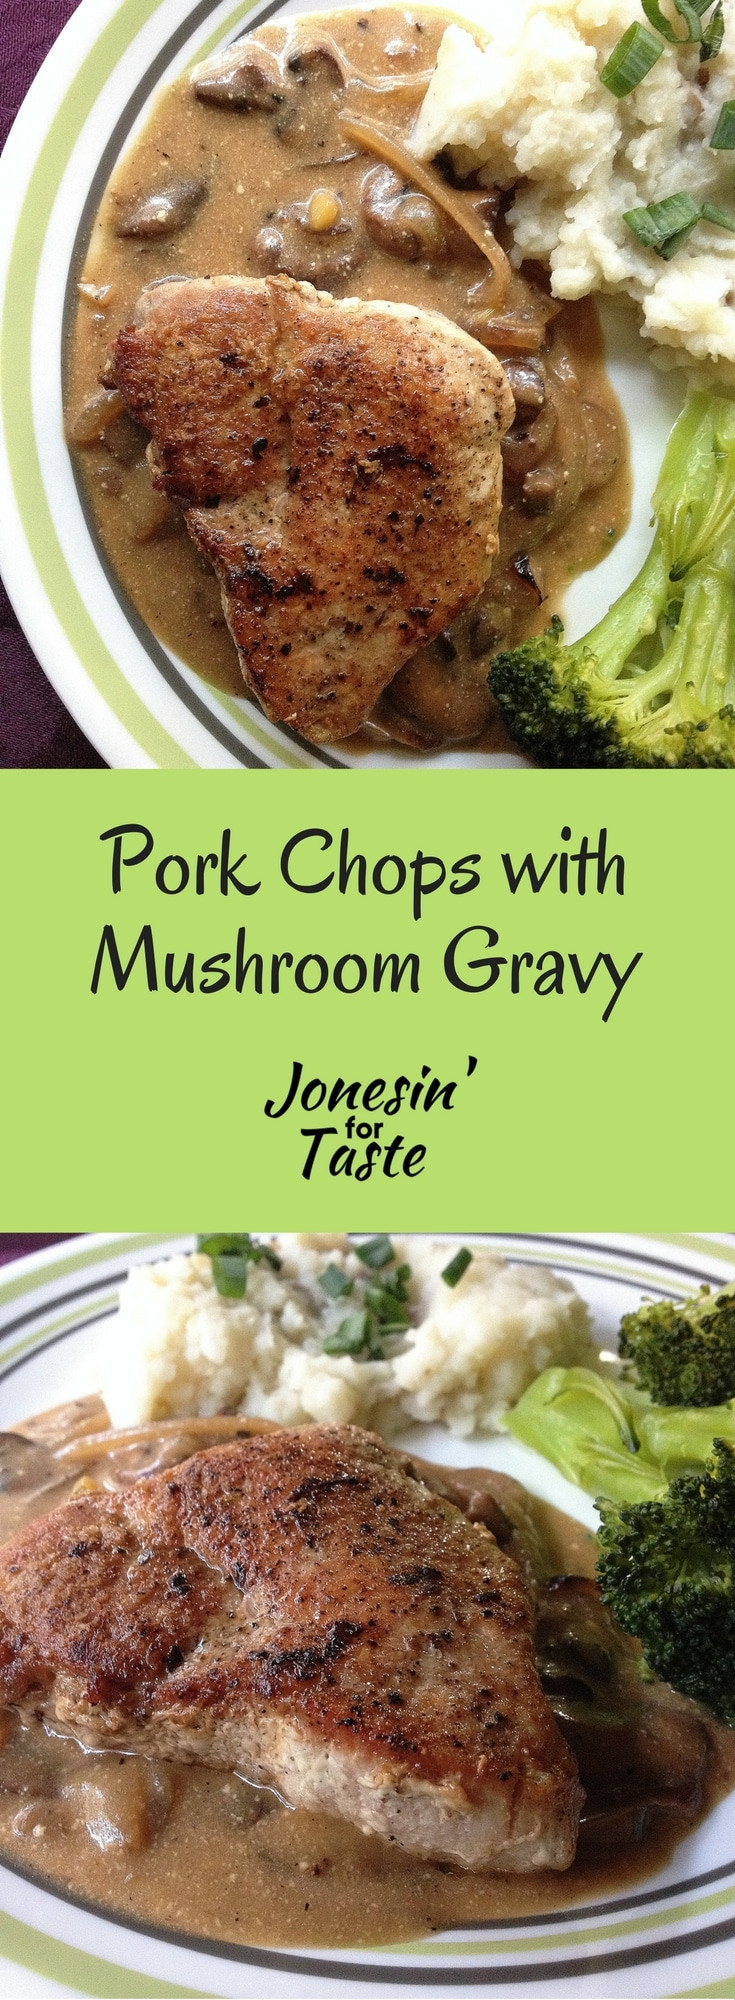 Mushroom Gravy Pork Chops
 Easy 30 Minute Pork Chops with Mushroom Gravy